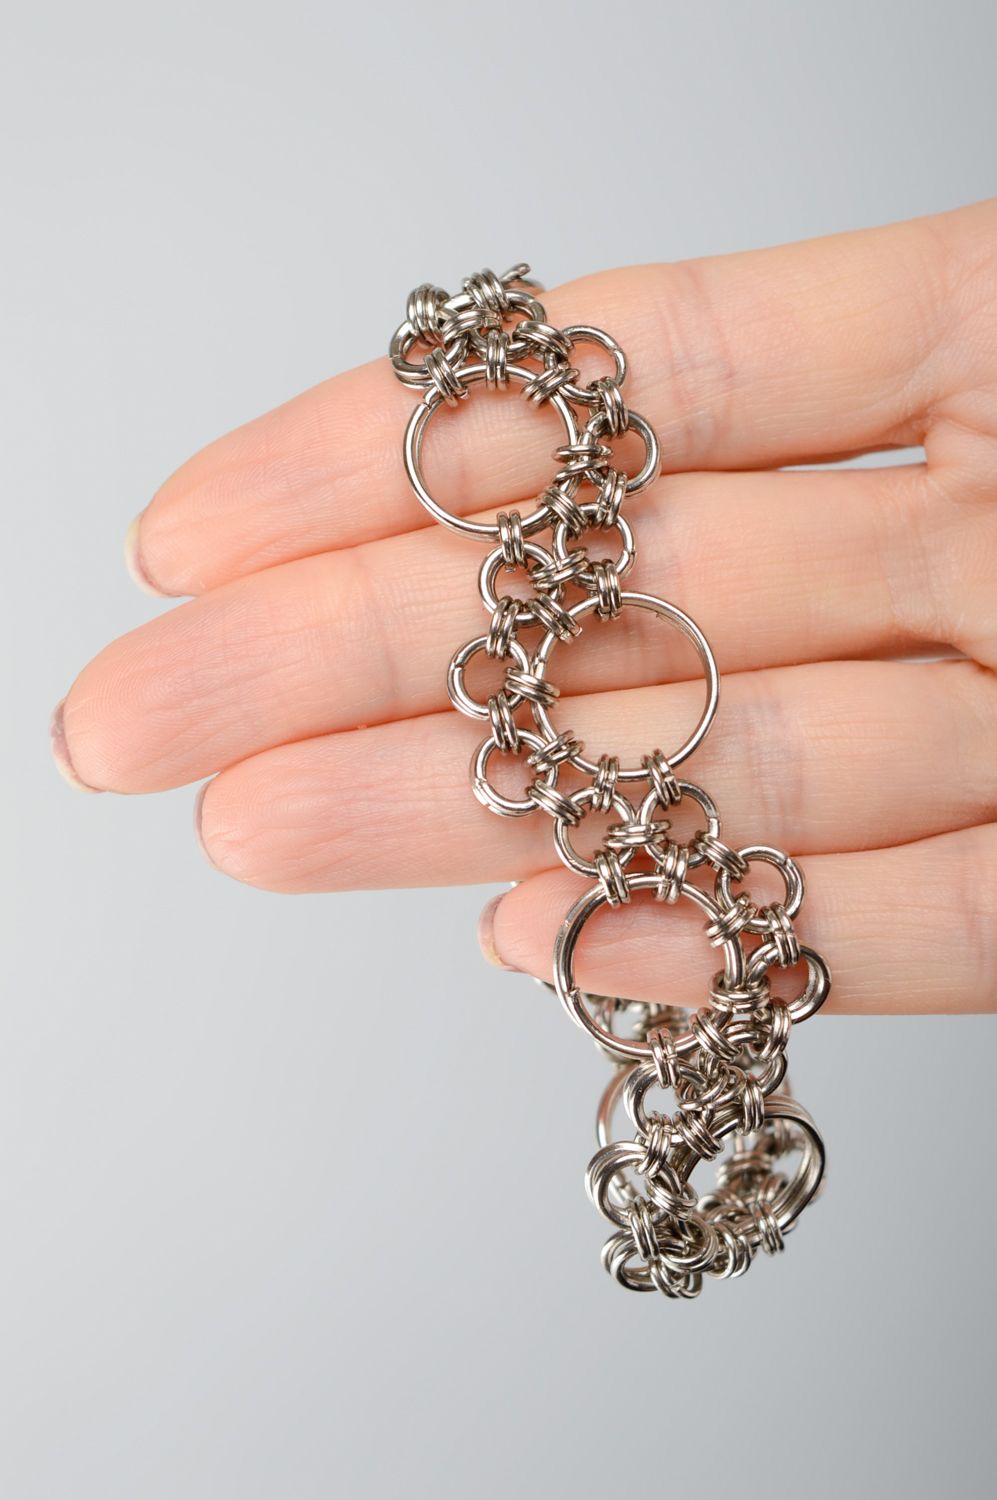 Handmade jewelry metal chainmail bracelet photo 4